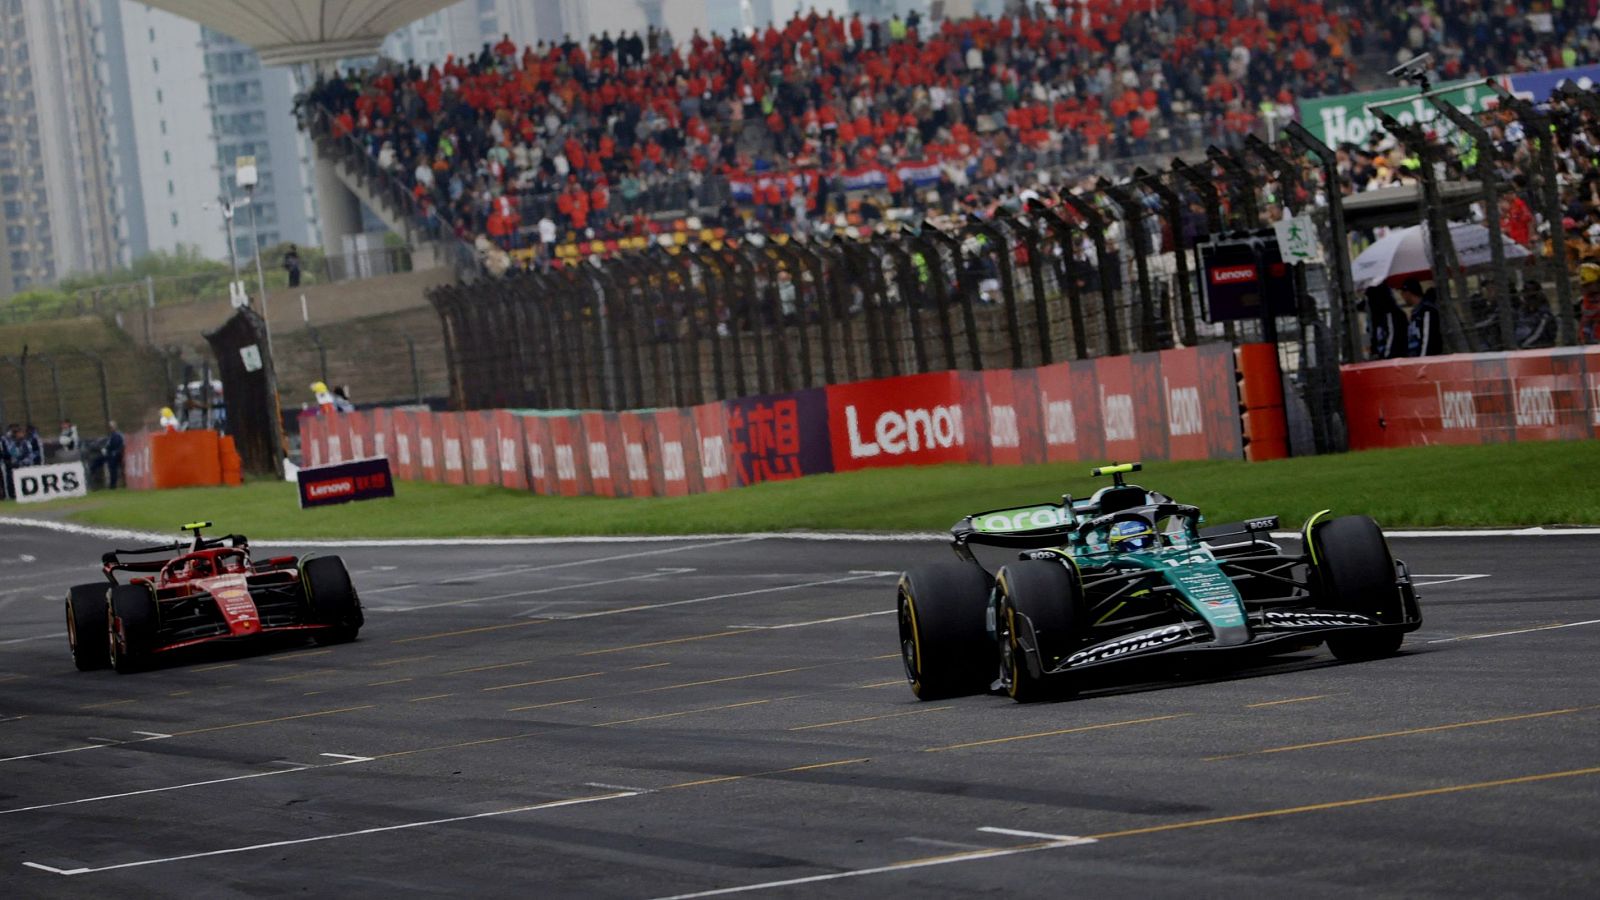 F1 GP China: la carrera al sprint en el circuito de Shanghái